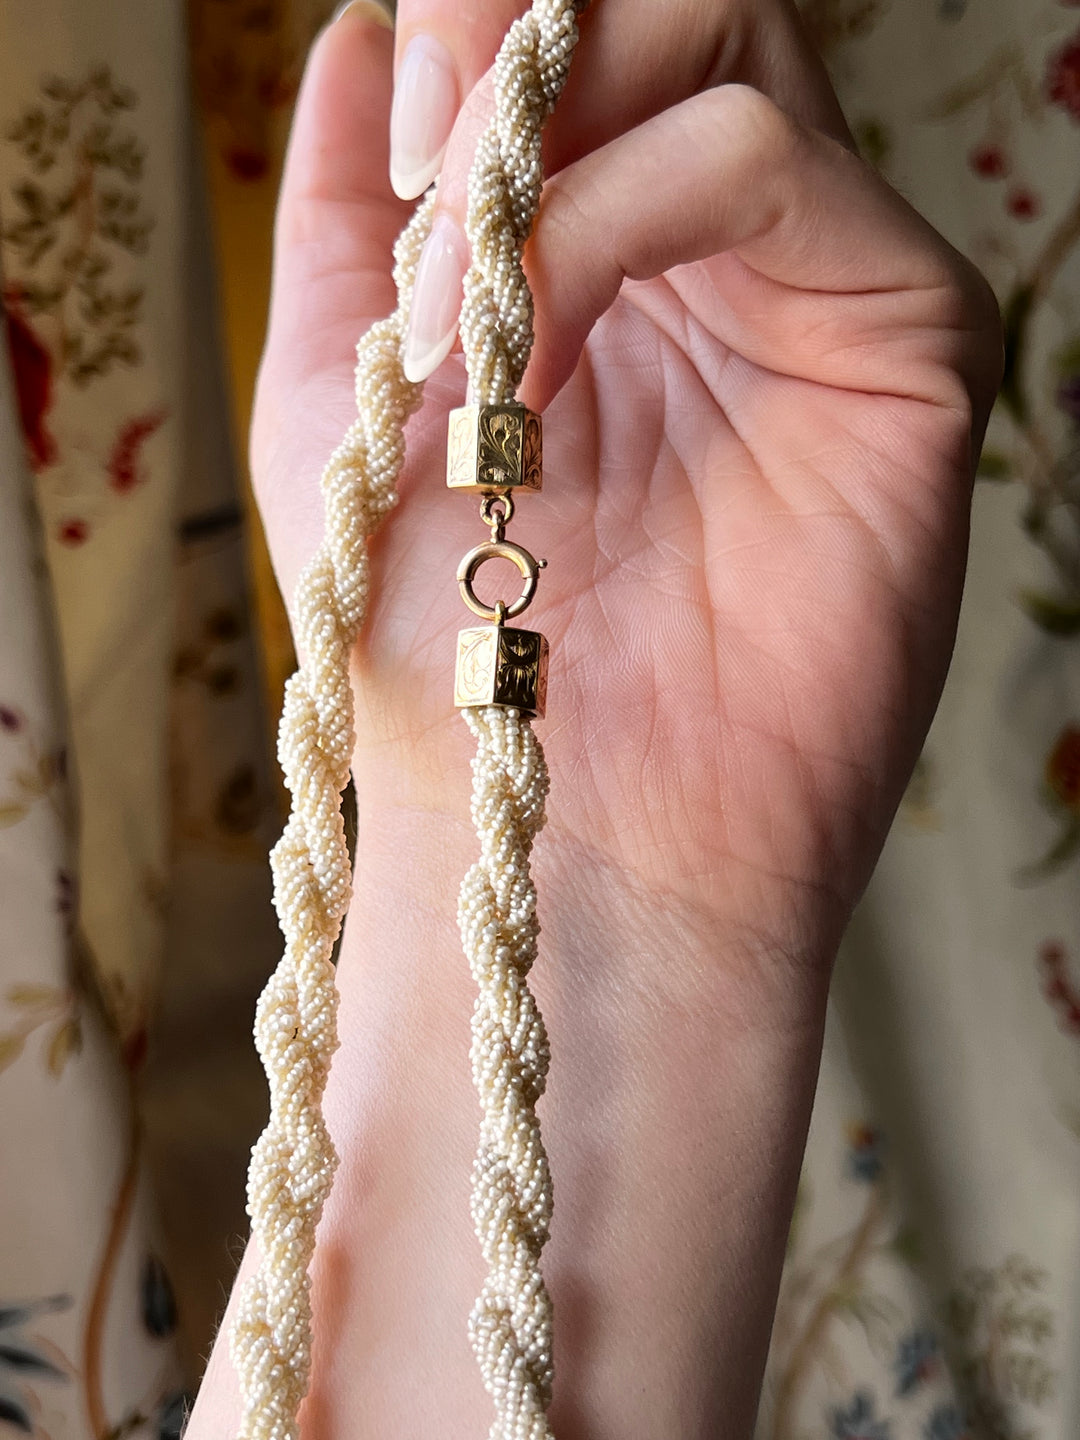 Extraordinarily Chic Pearl “Rope” Chain Circa 1840